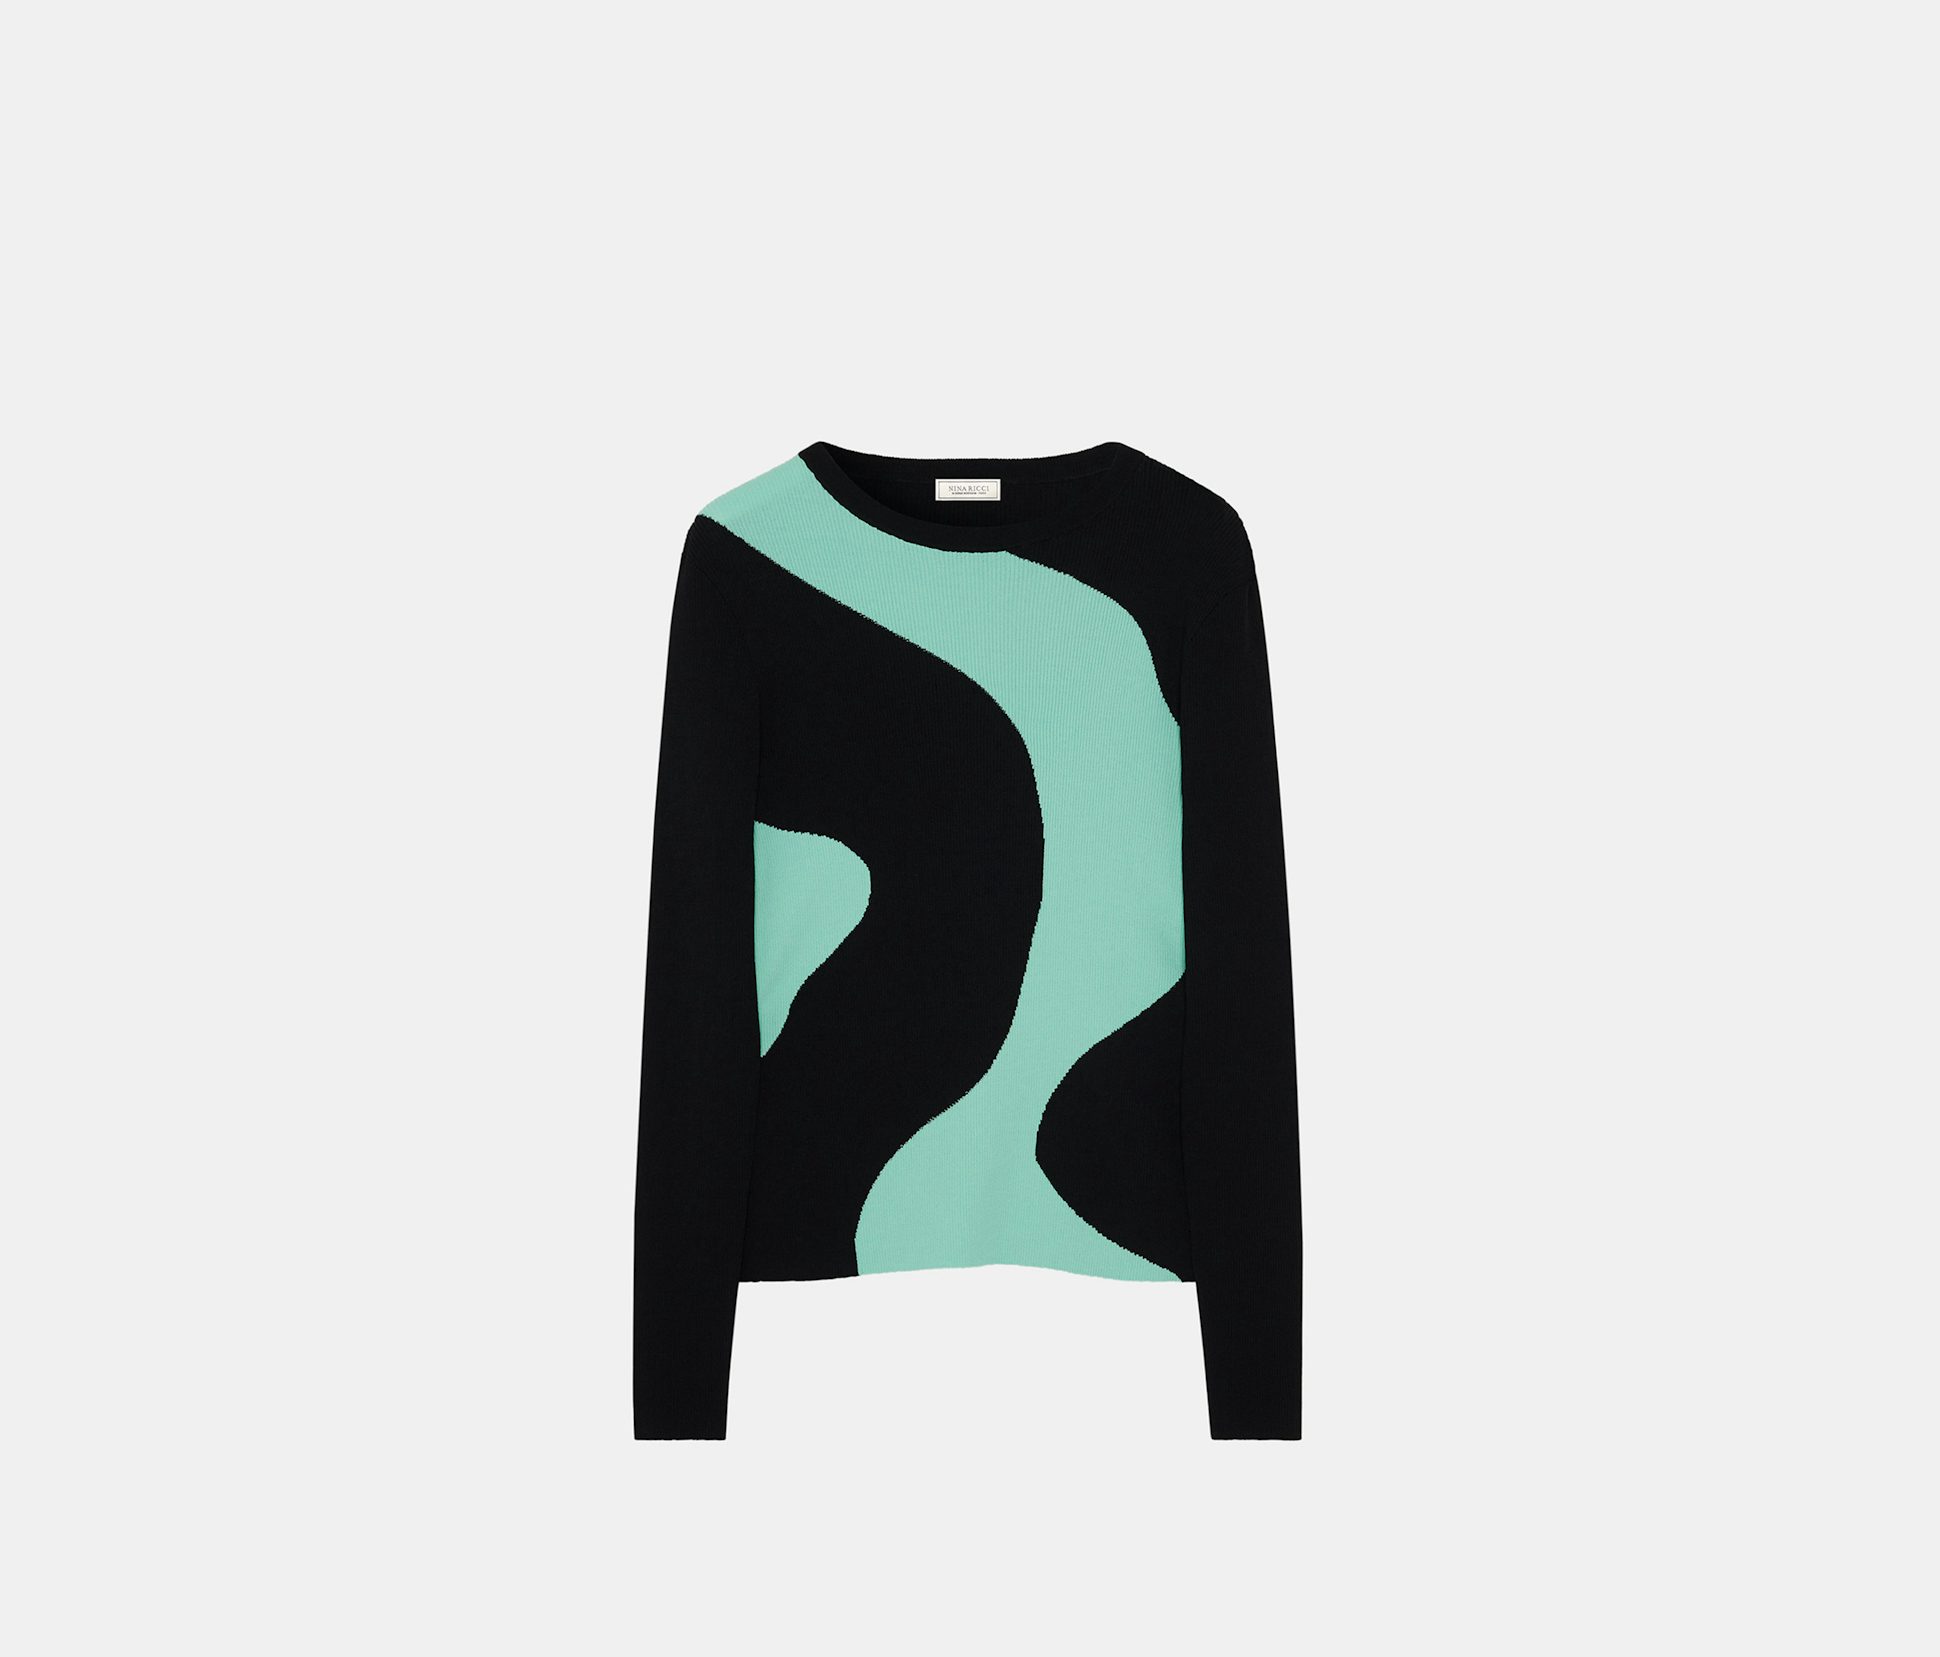 Long-sleeved sweater in black and water green intarsia - Nina Ricci